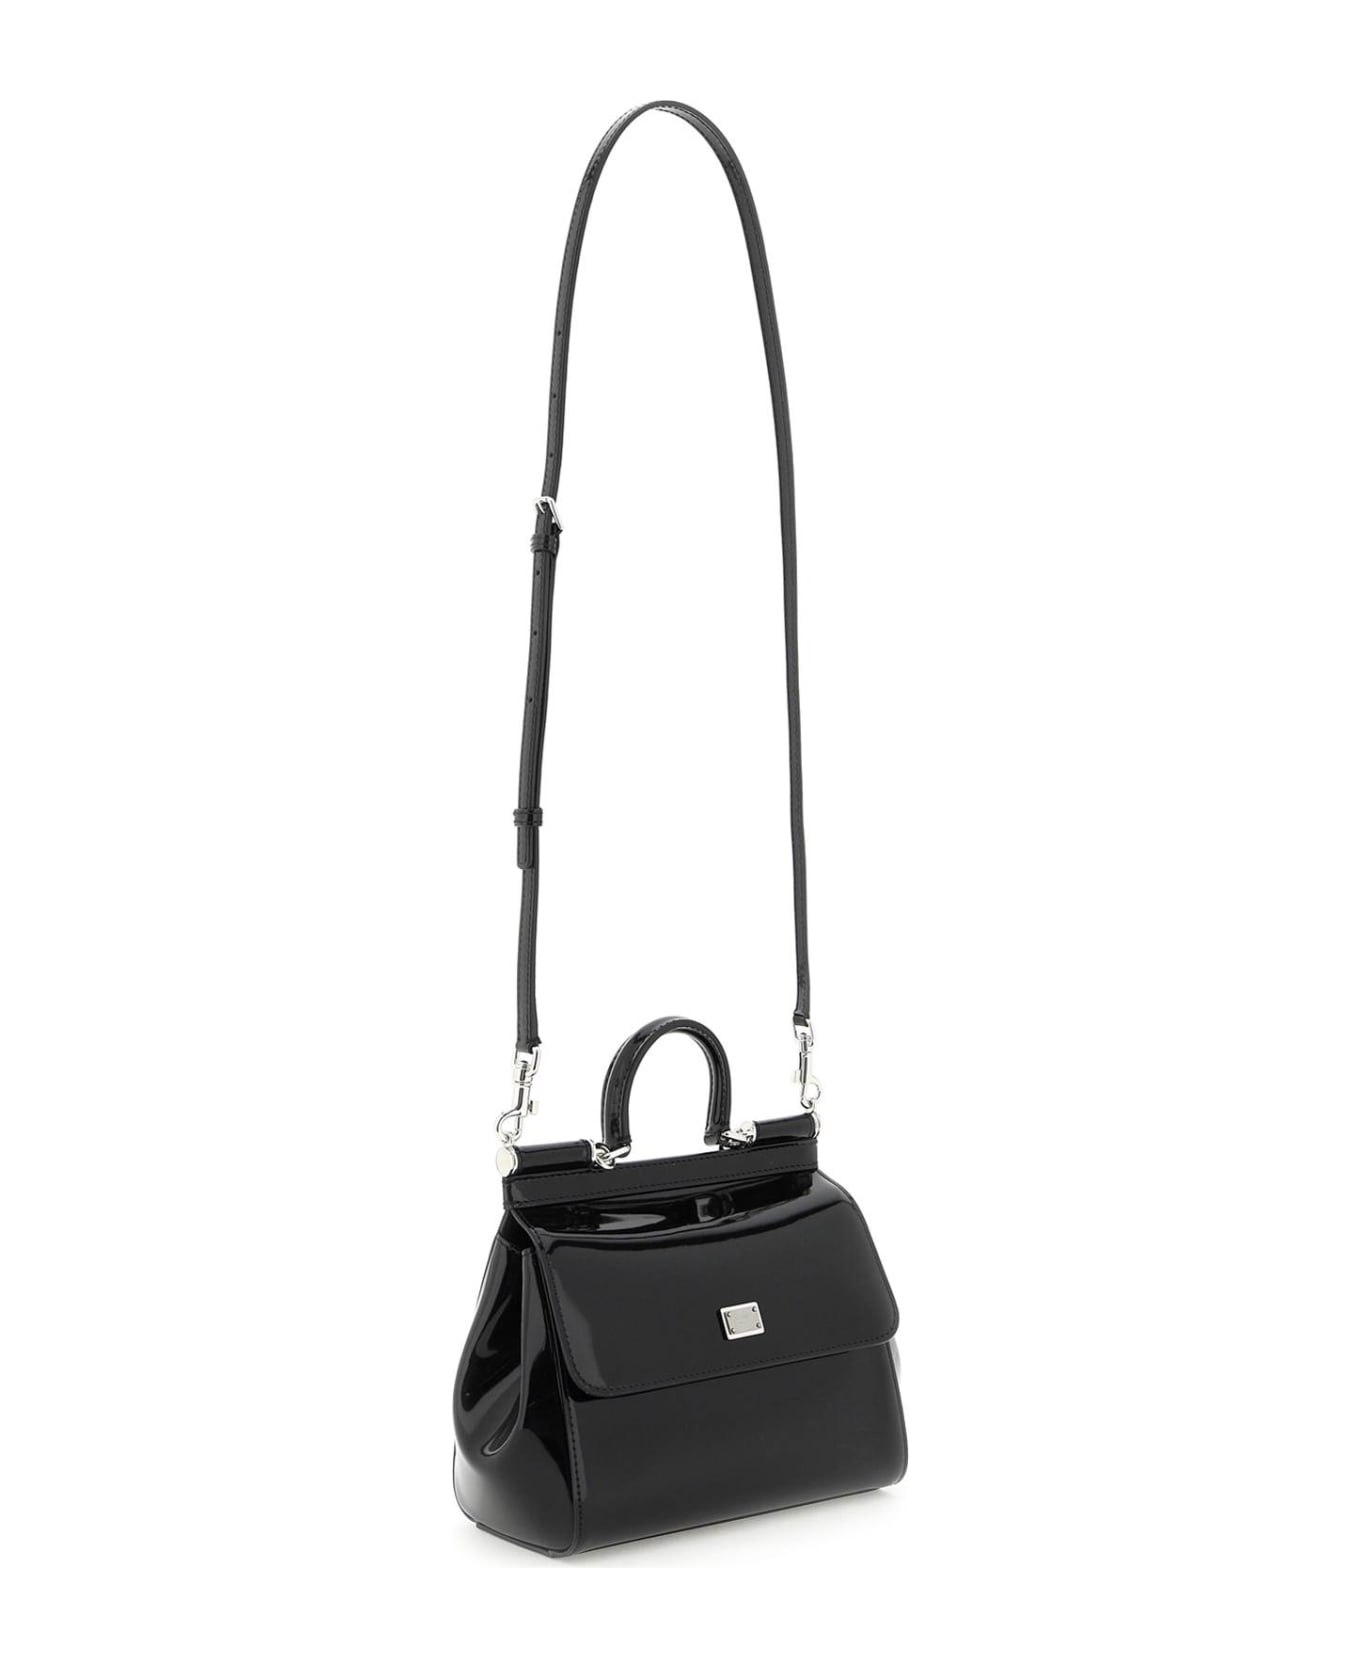 Dolce & Gabbana Sicily Handbag - black